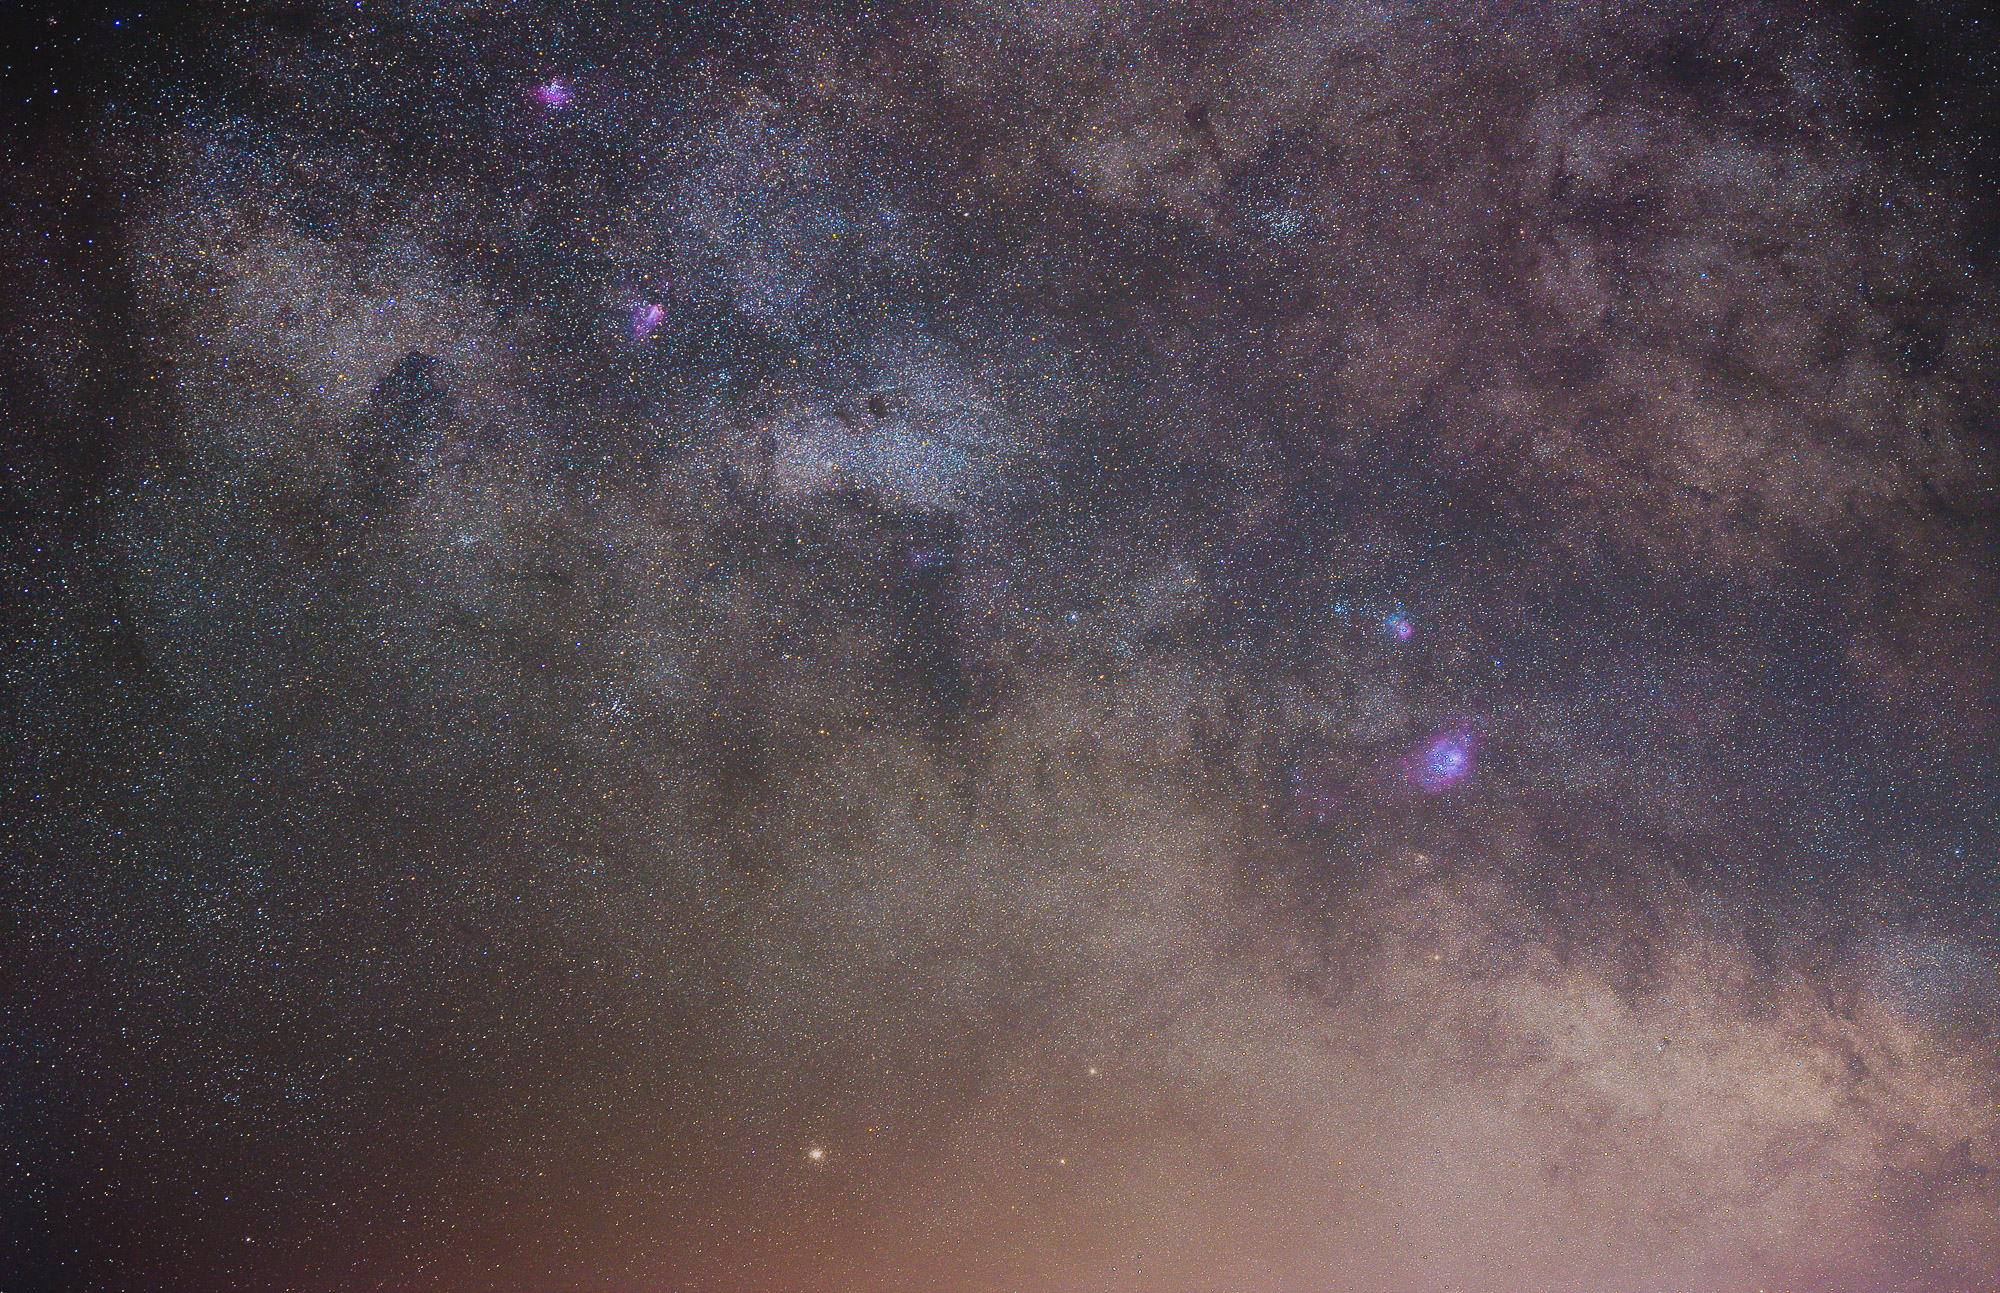 Milky Way galactic center shot on the Sigma 105mm f/1.4 DG HSM Art Lens